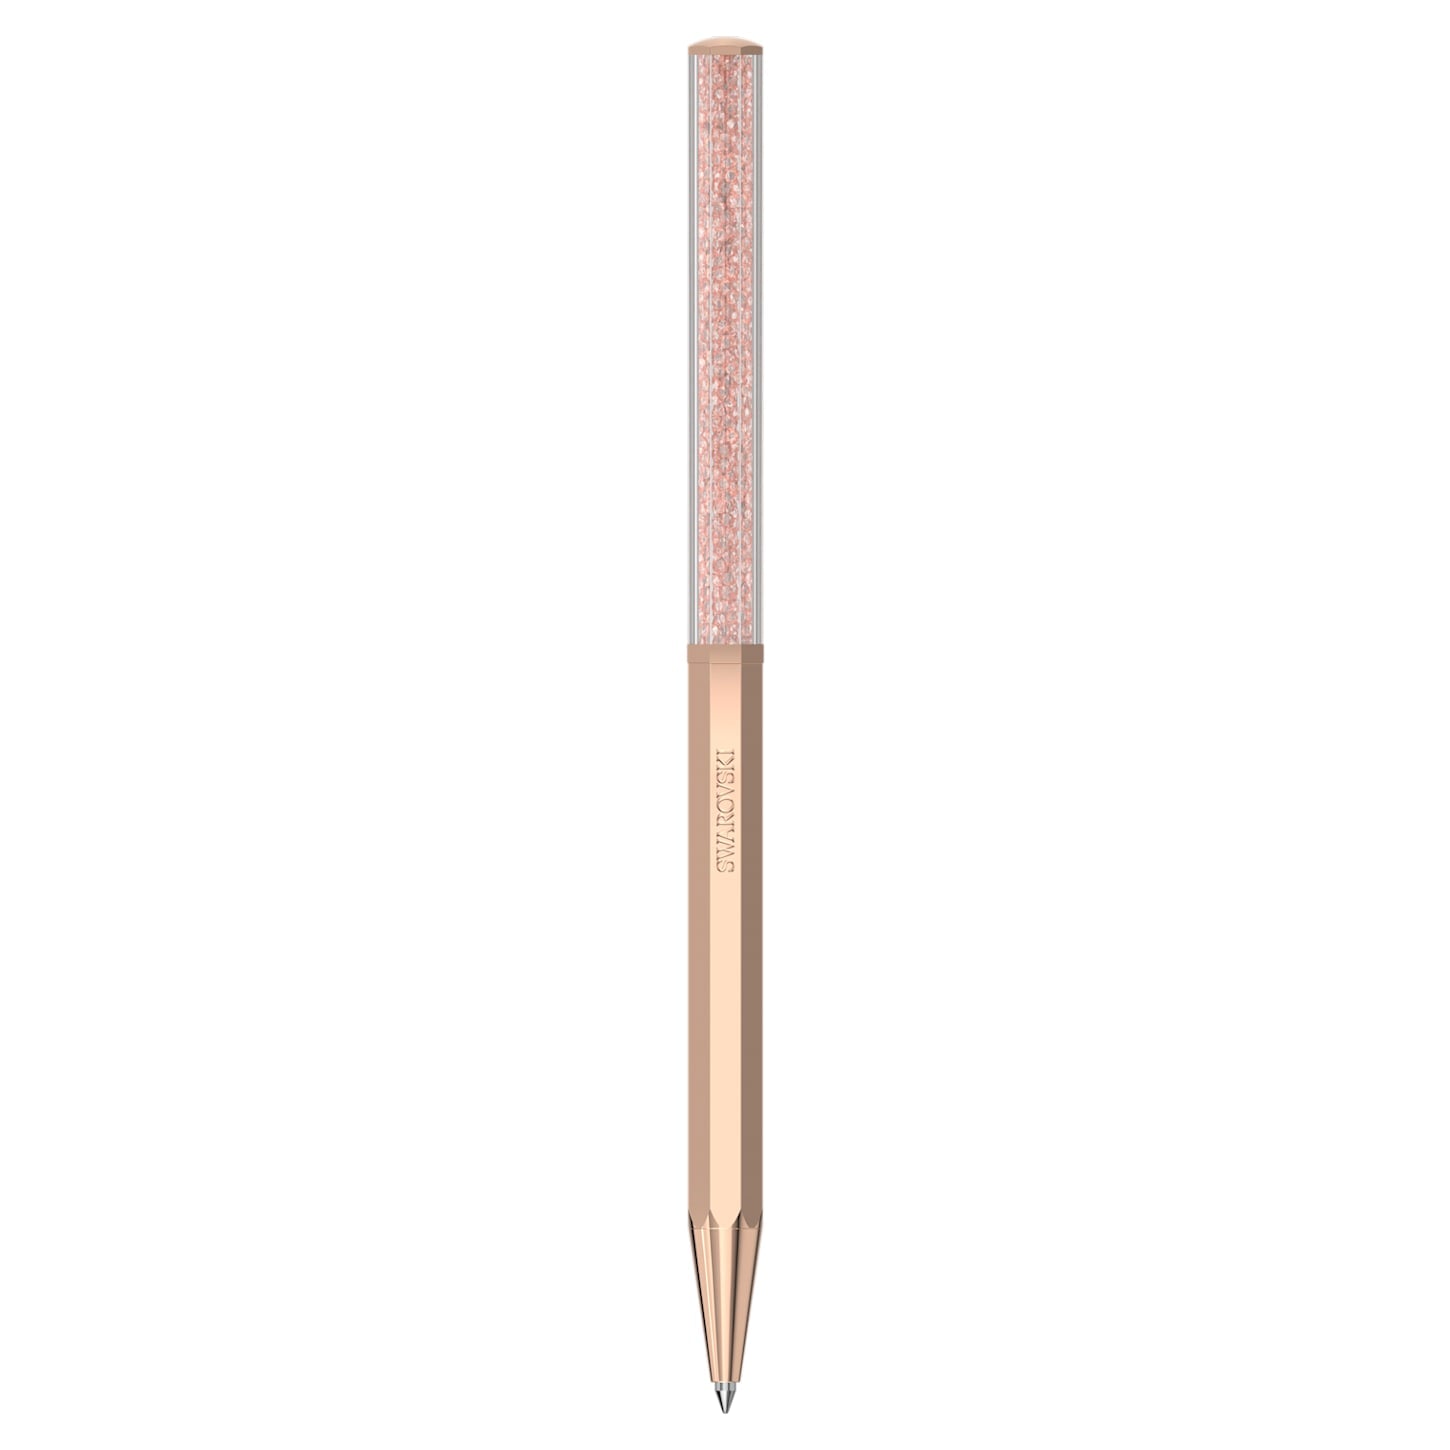 Crystalline - Octagonal - Pink - Ballpoint Pen - Swarovski